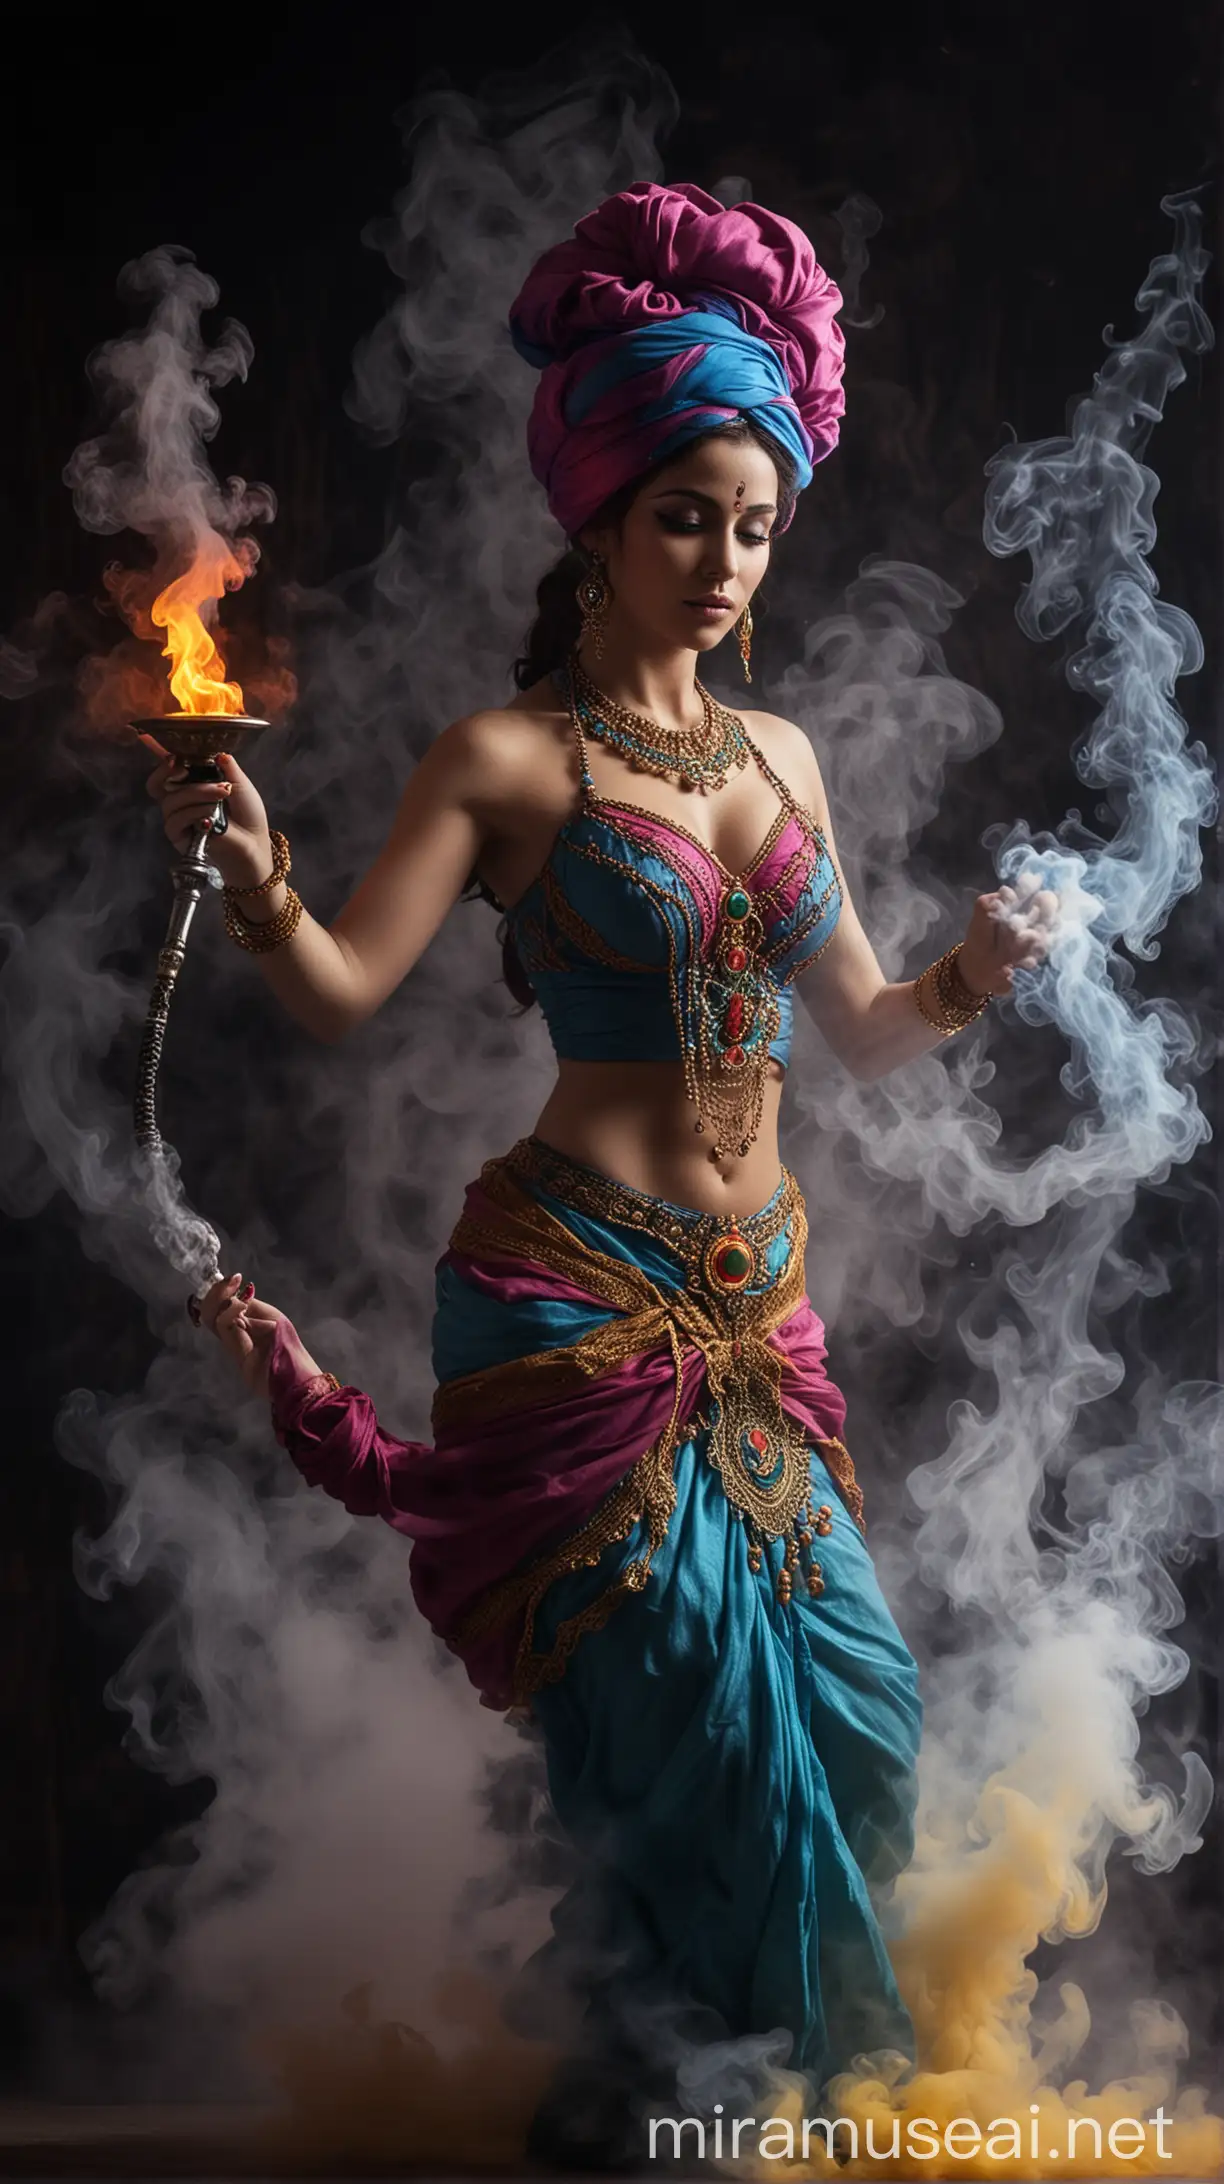 Colorful Female Genie Rising from Hookah Smoke